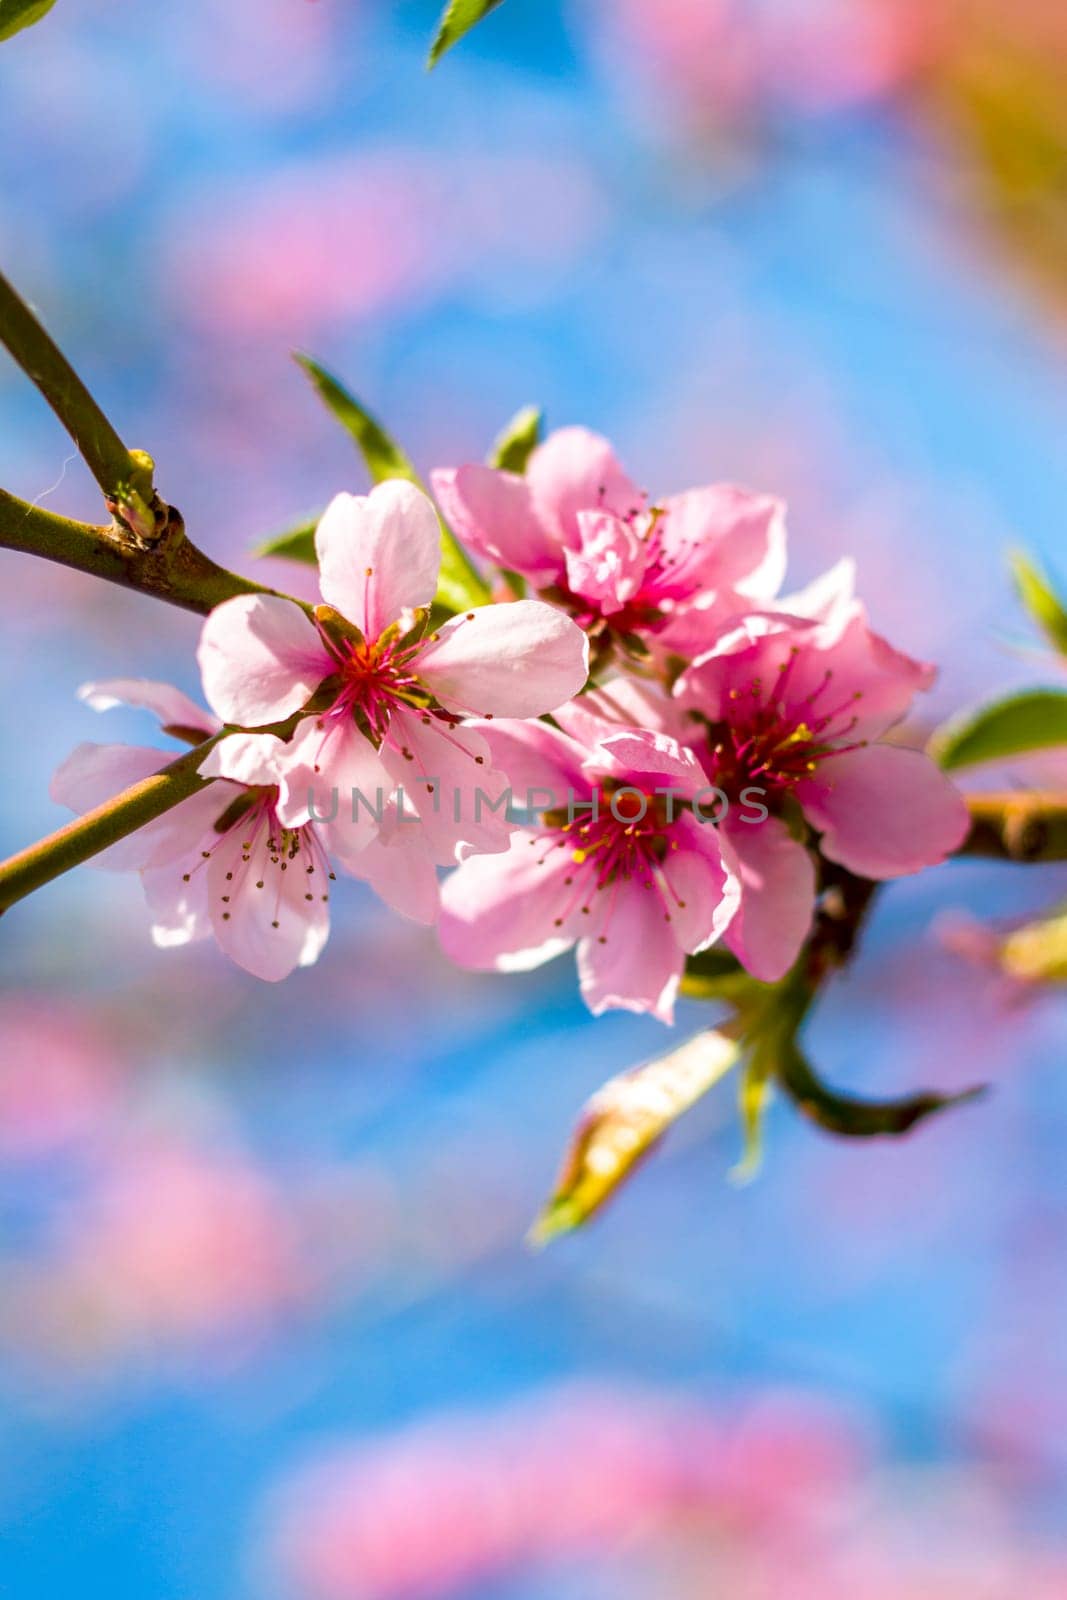 Nectarine peach blossom flowers on spring branch Agriculture beautiful season farming springtime landscape